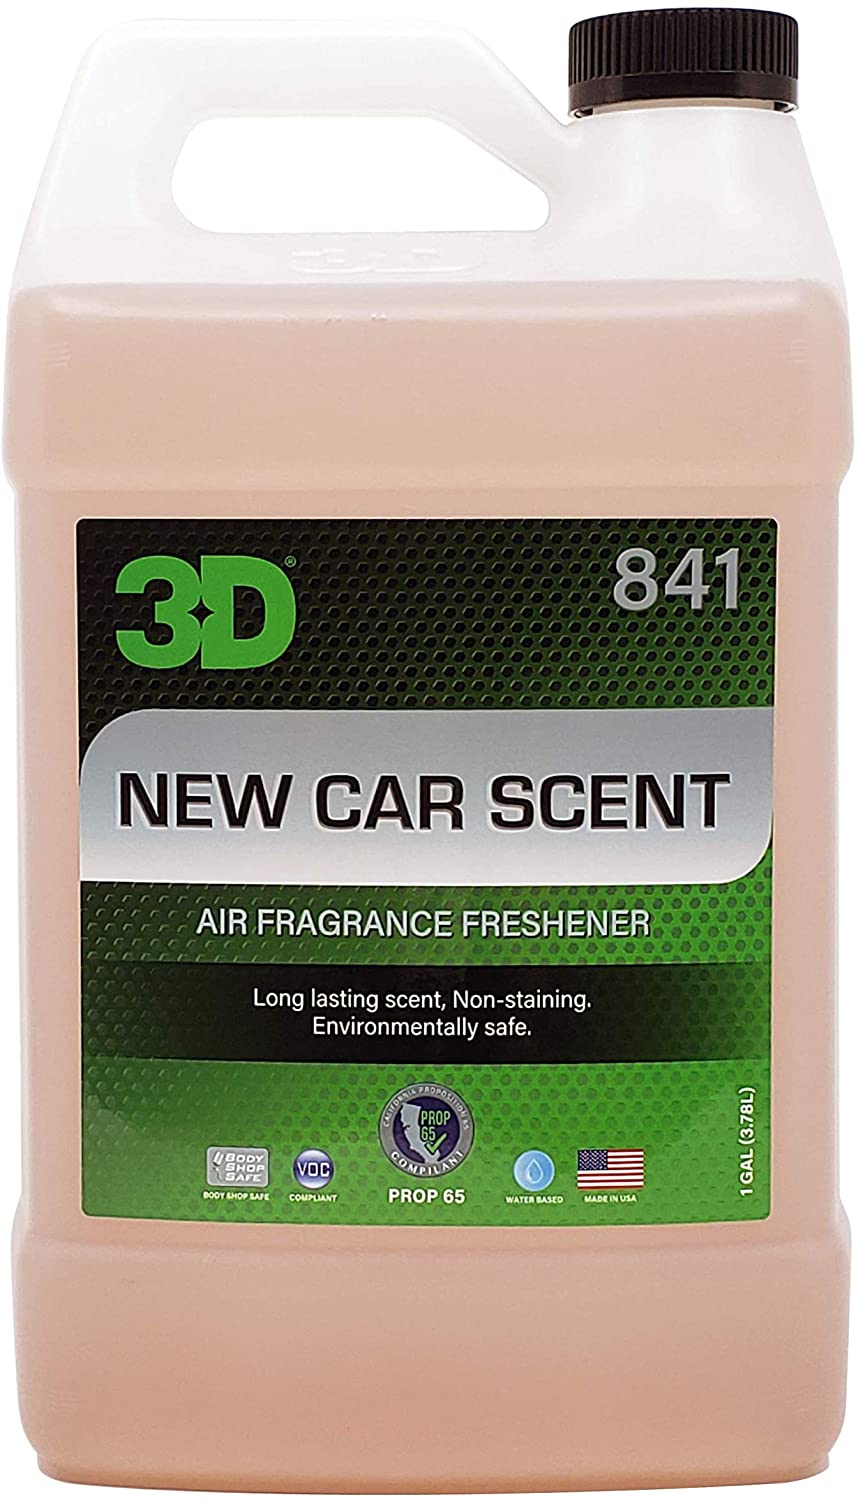 New Car Scent Air Freshener - 3D Car Care